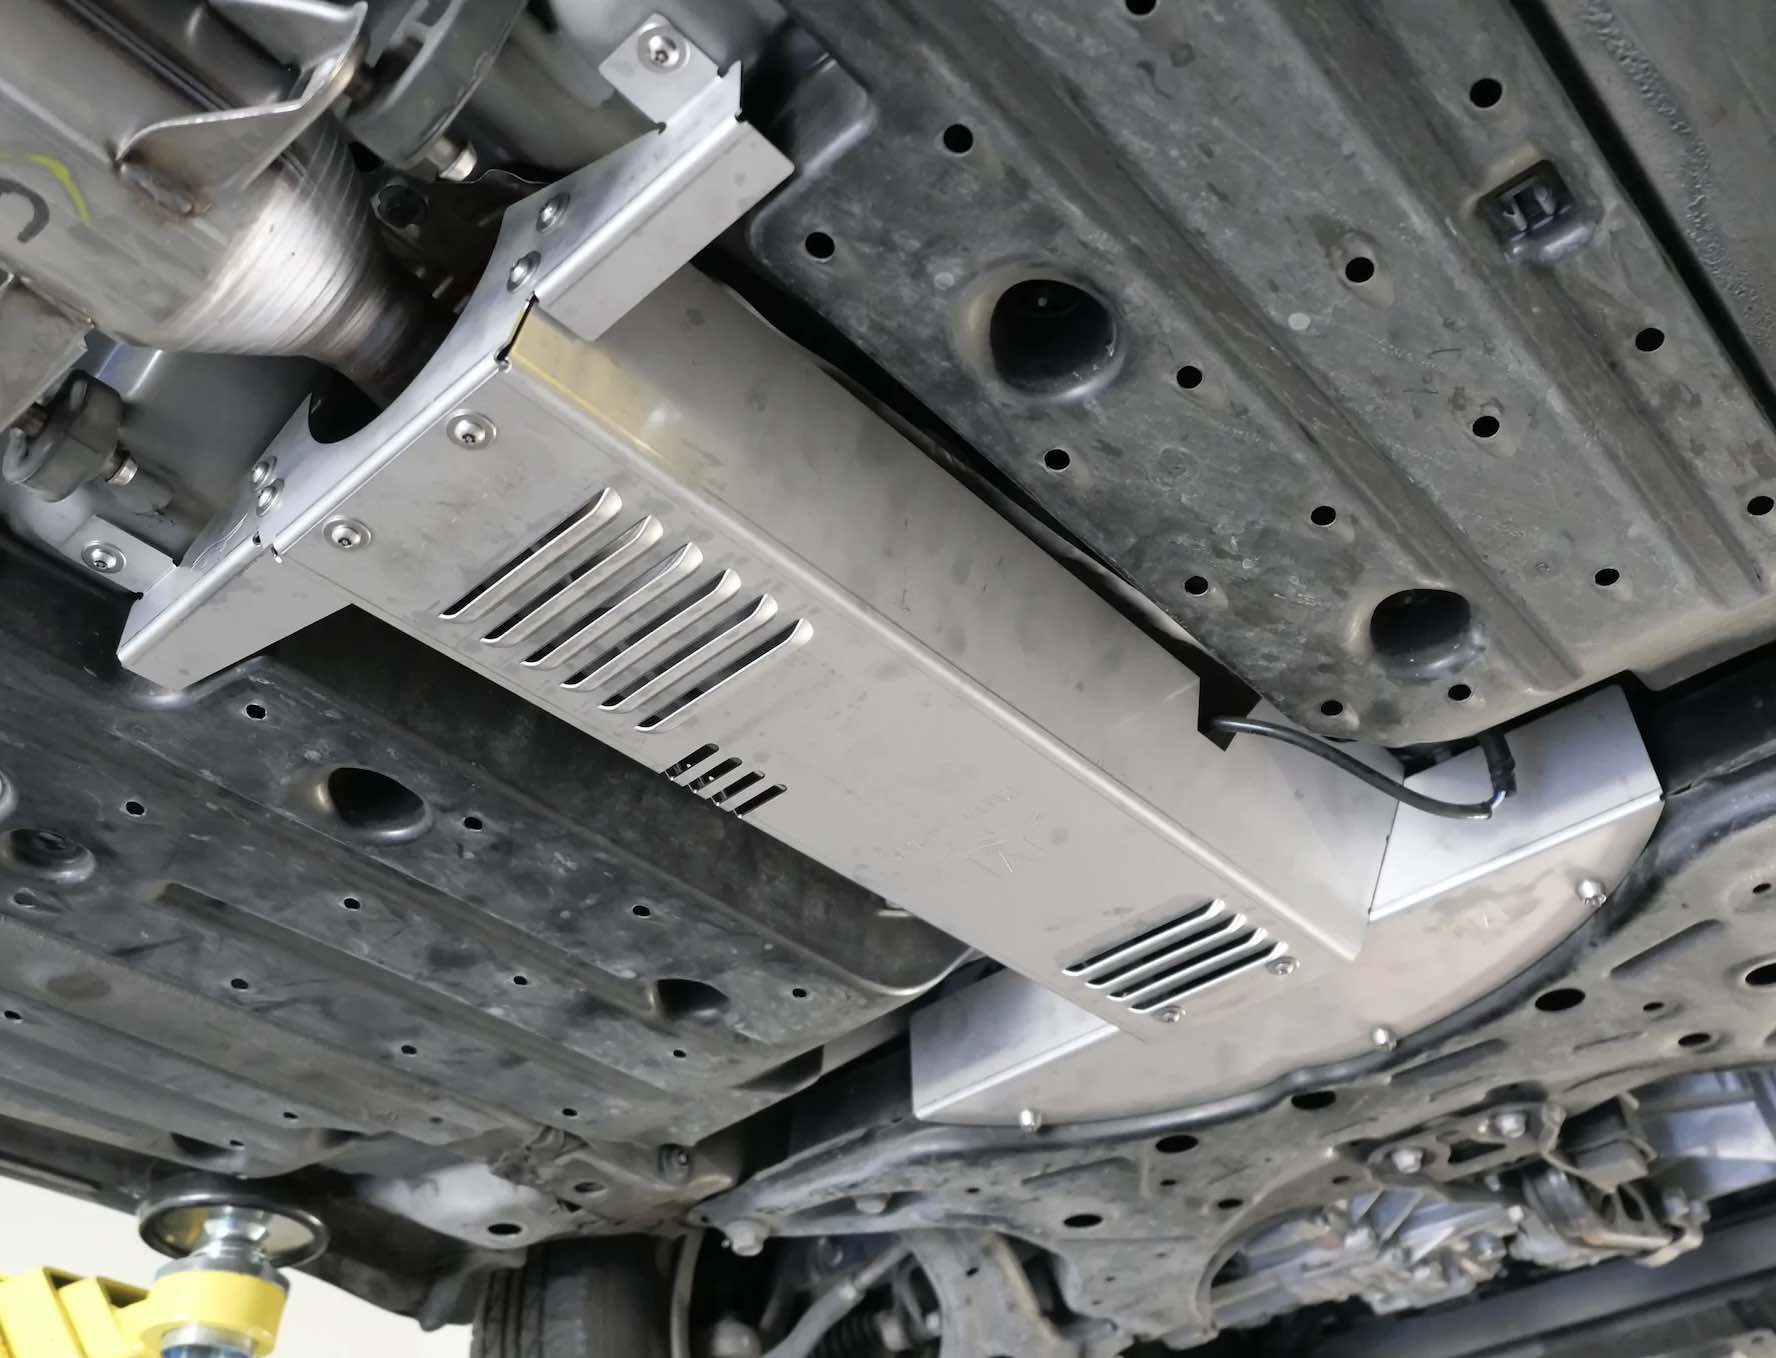 Miller Cat Prius catalytic converter shield installed on car